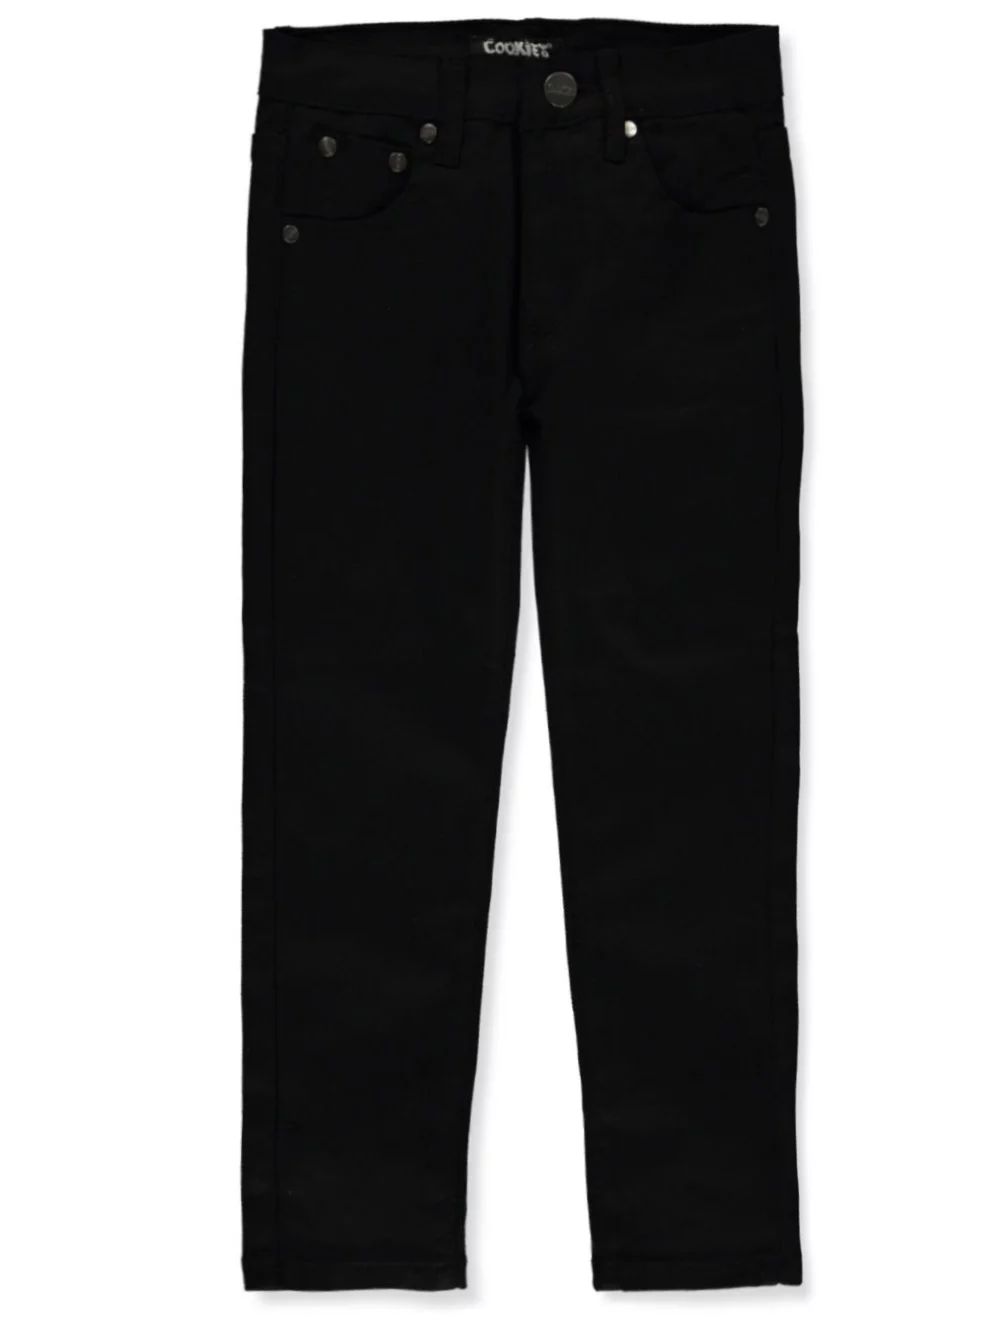 Cookie's Boys' Skinny Stretch Jeans - black, 3t (Toddler) - Walmart.com | Walmart (US)